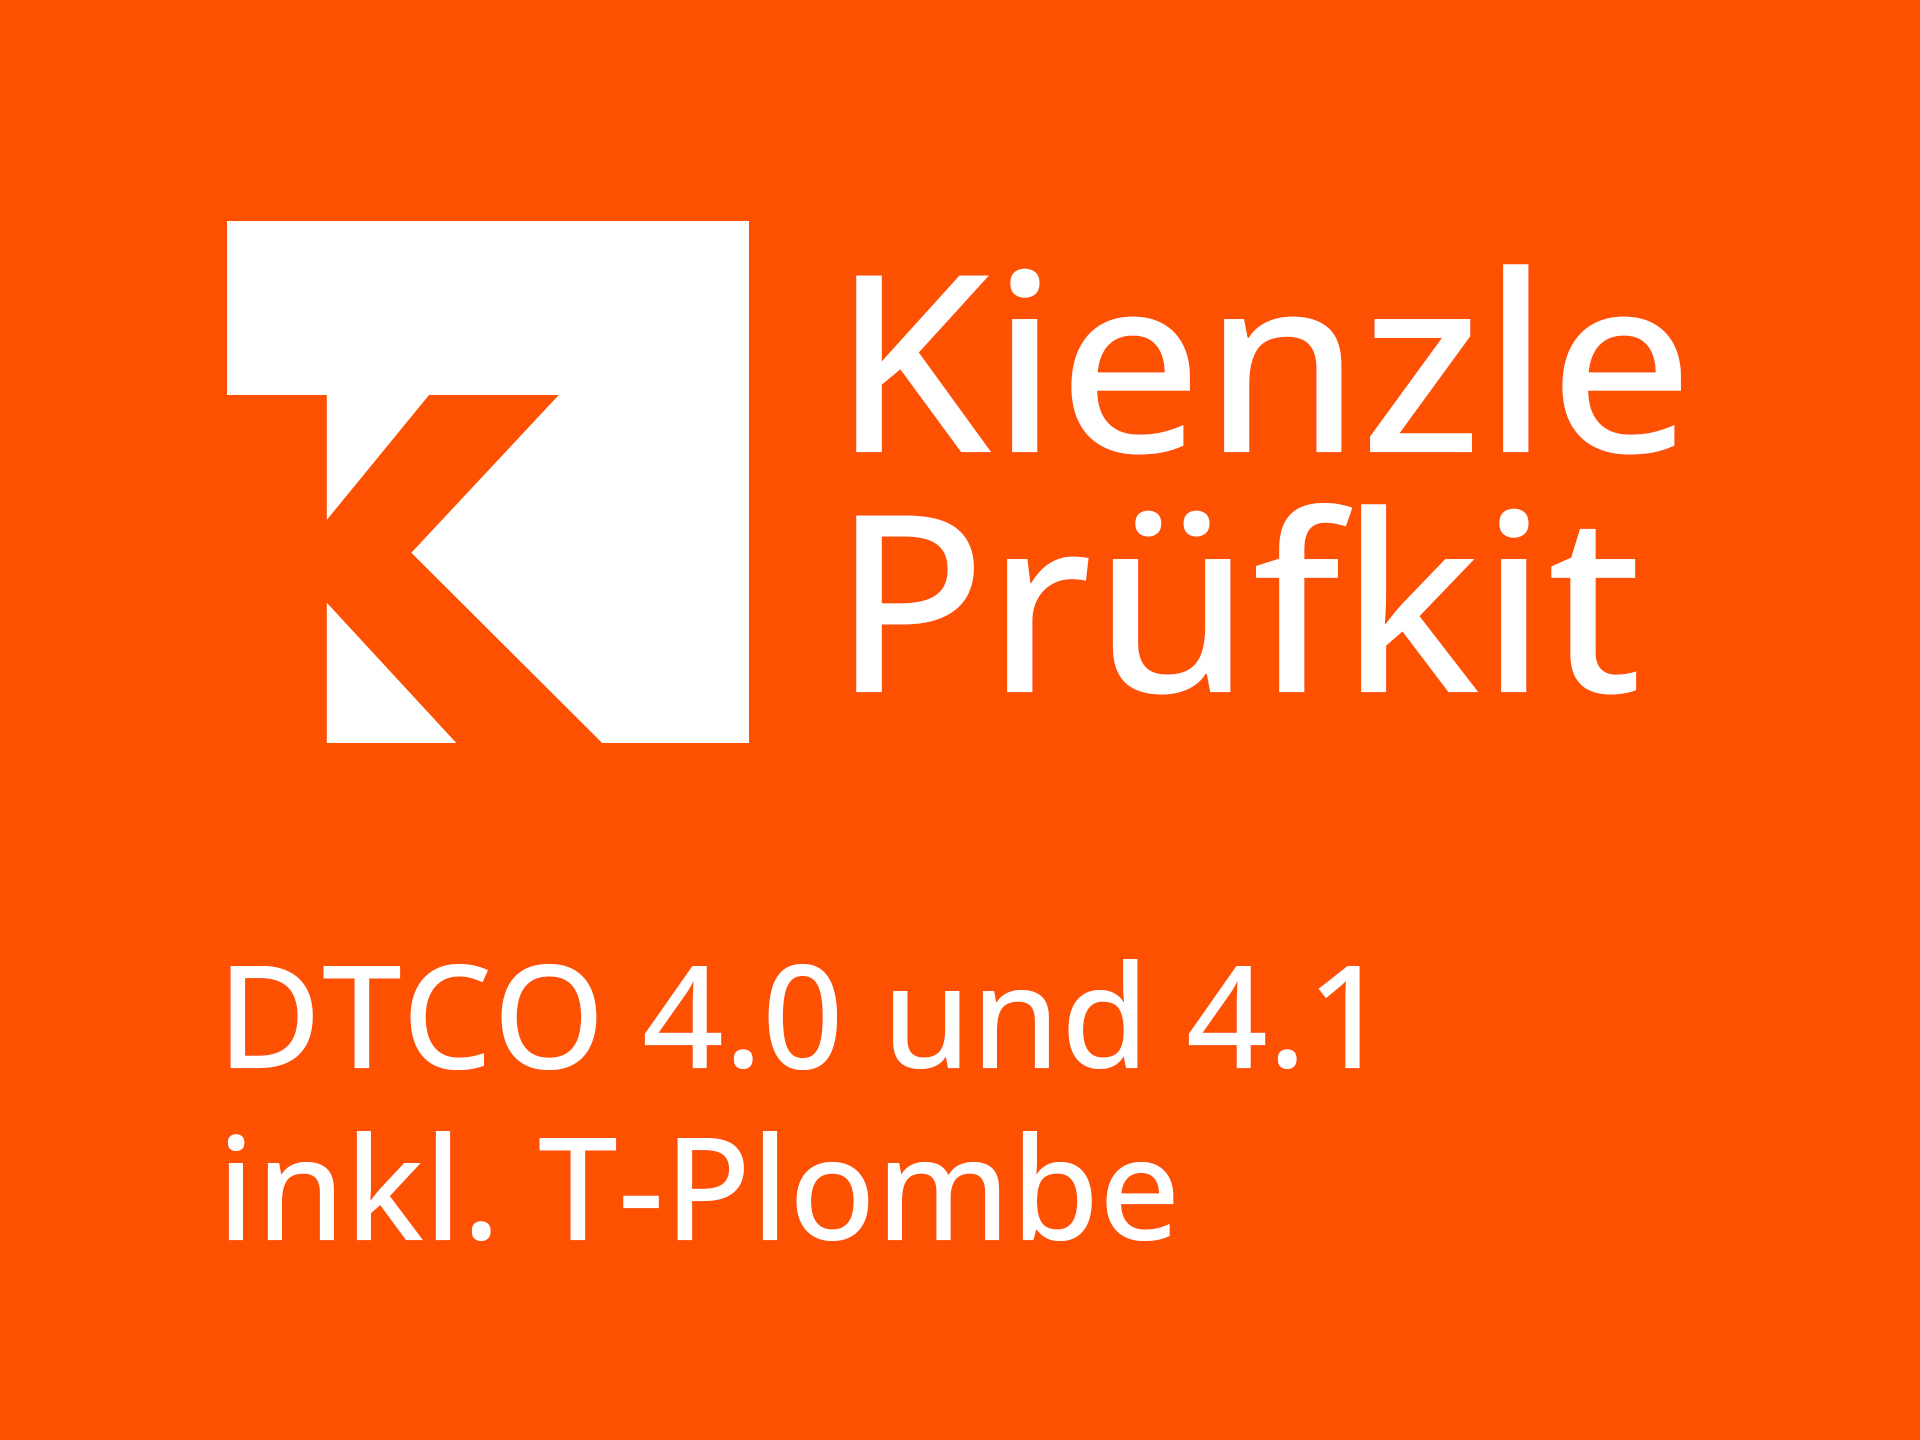 *Kienzle Prüfkit für DTCO 4.0 und 4.1 inkl. T-Plombe (VE:1=5 Stück)